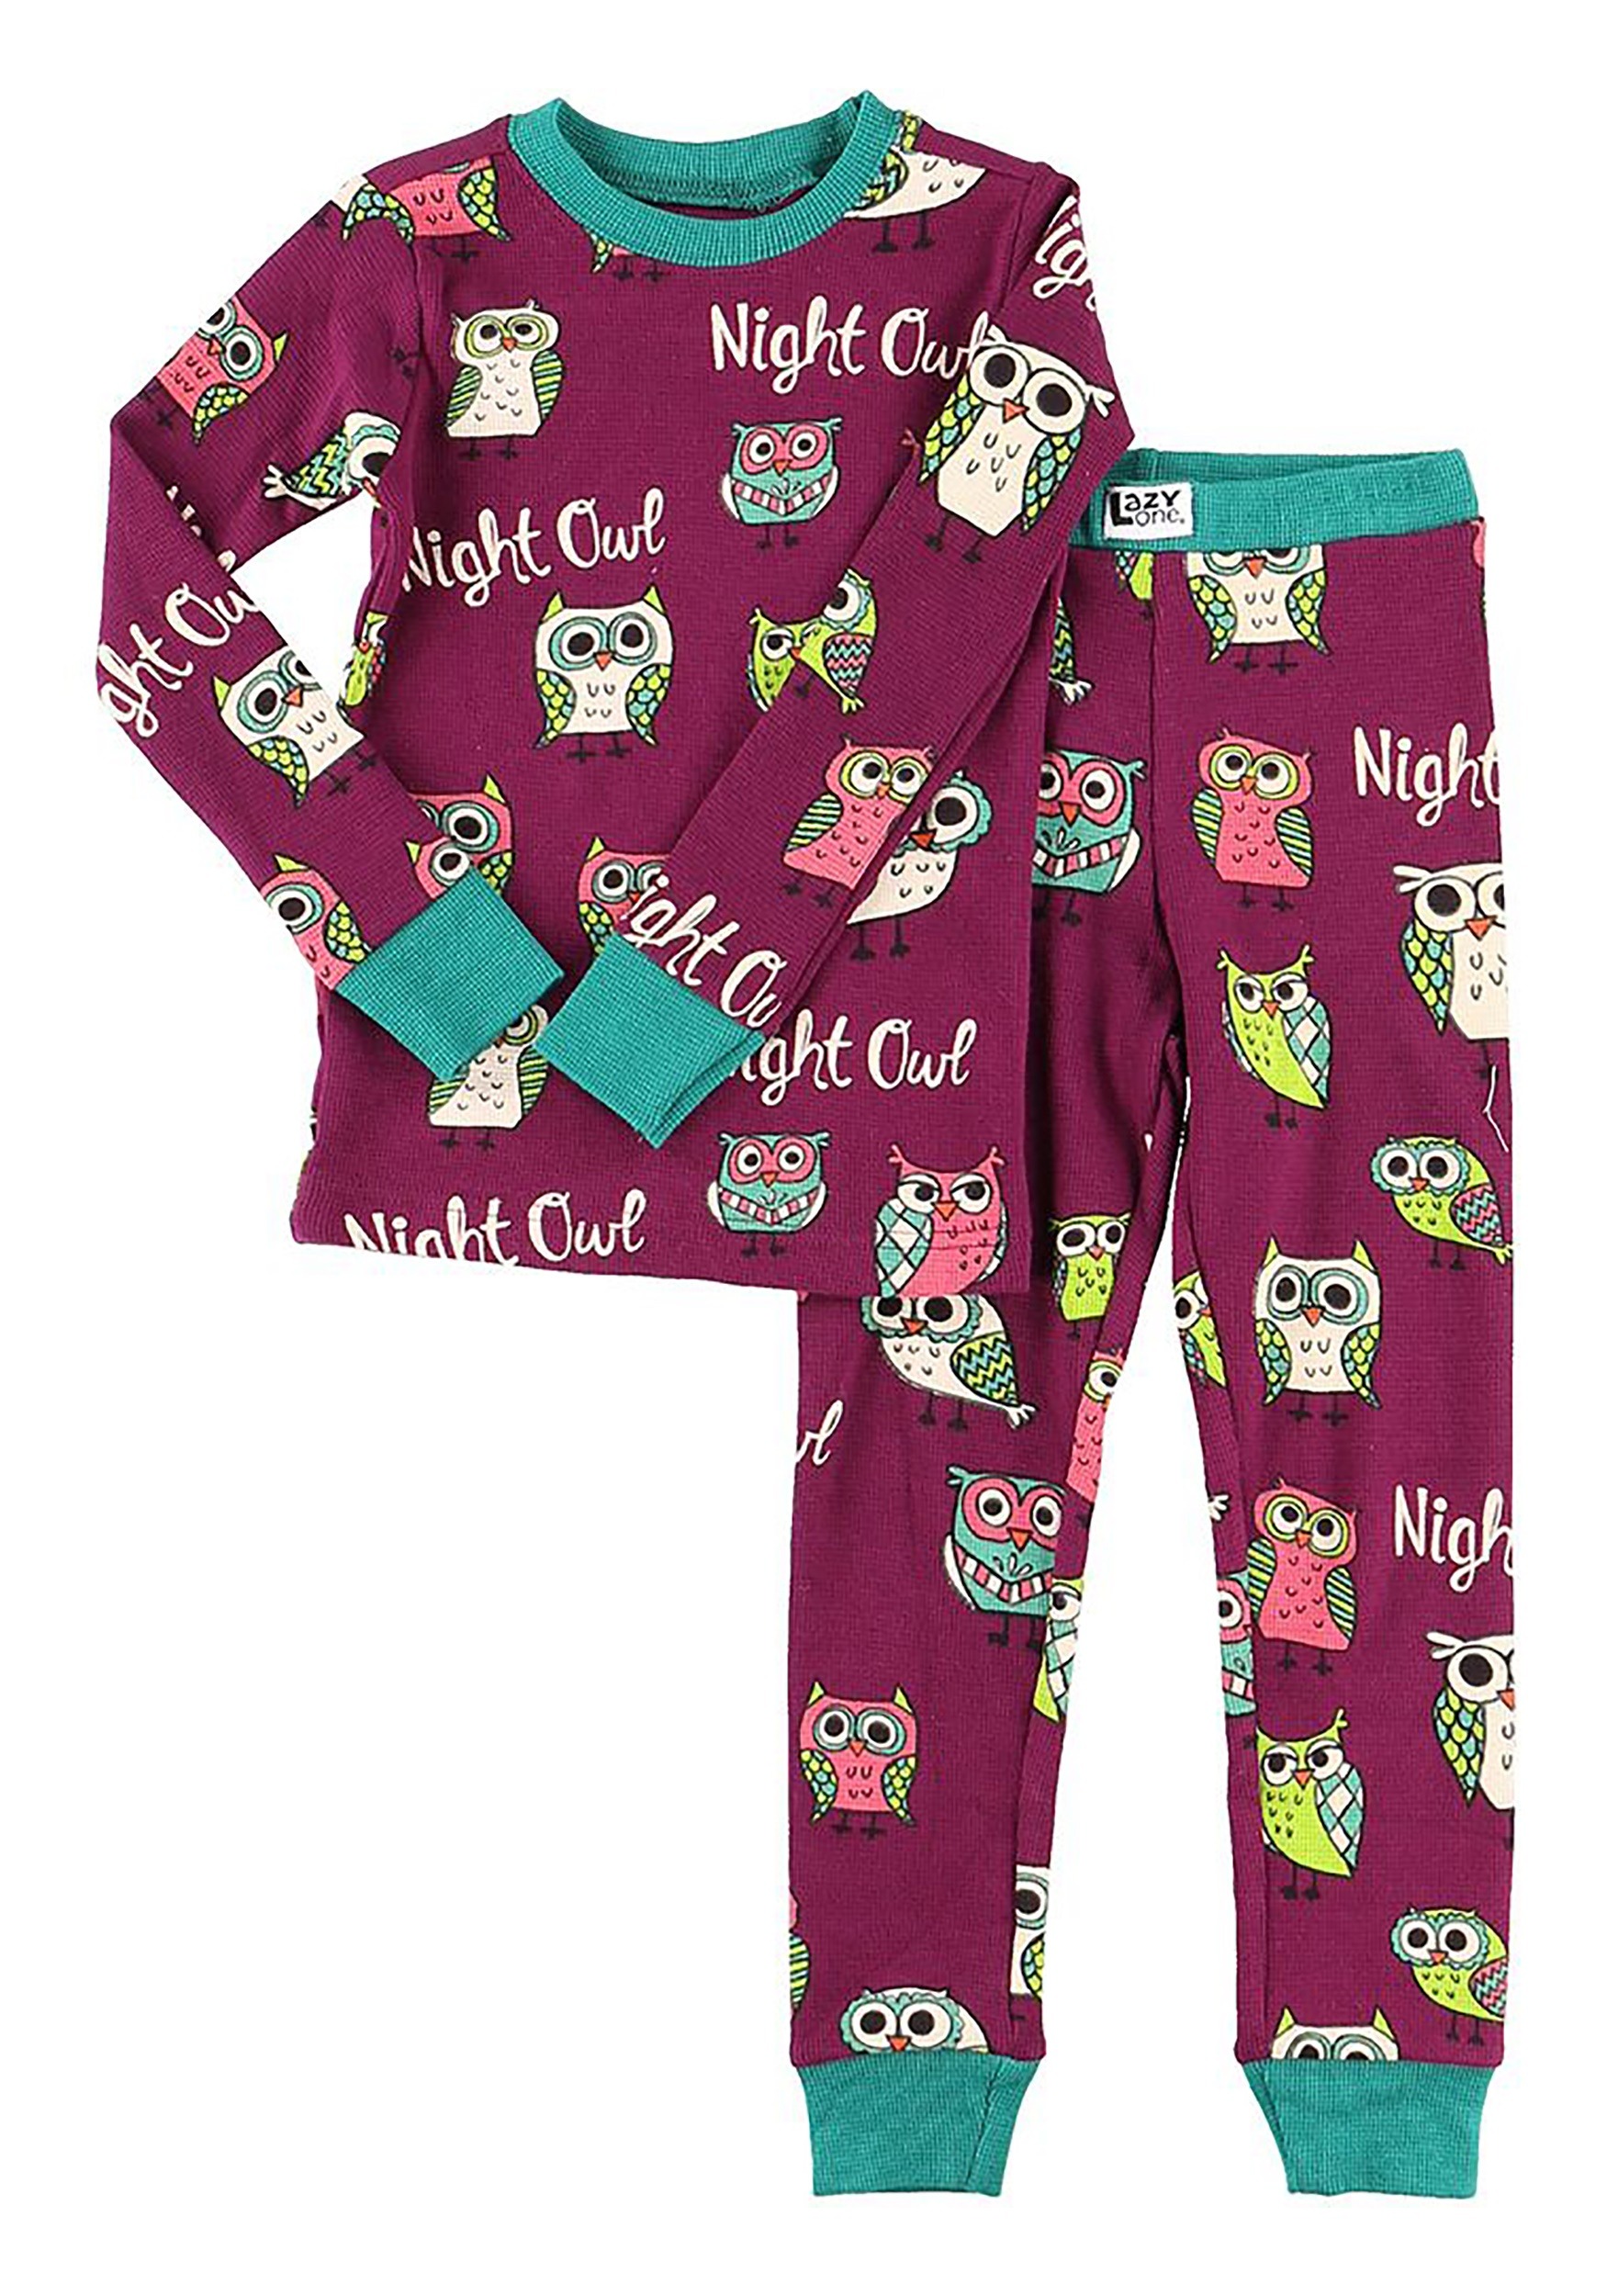 Kids Among Us Nightwear 2pcs Long Sleeve T-shirt Pjs Sets Pyjamas Sleepwear Gift